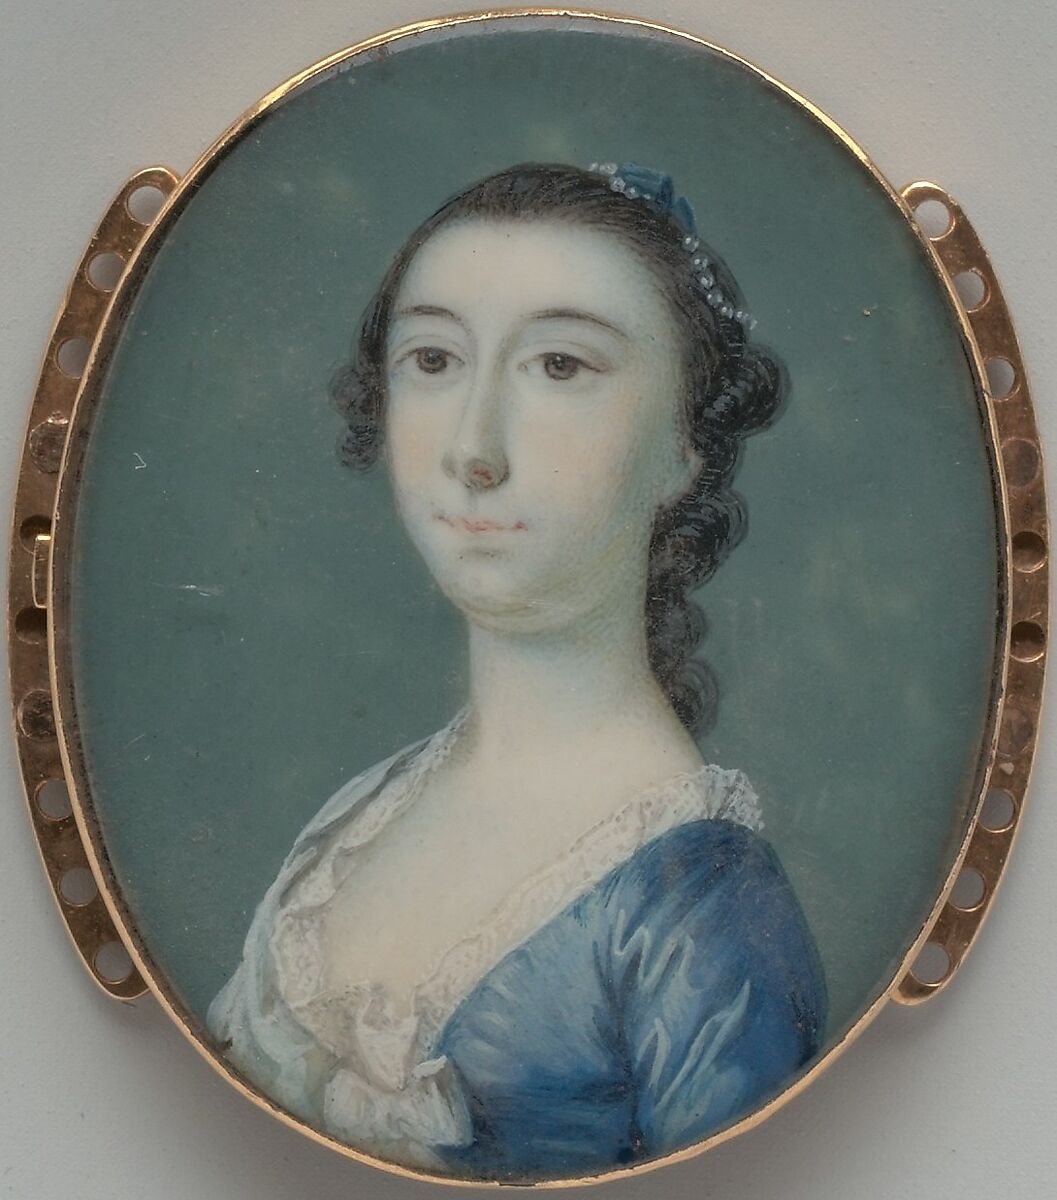 Mrs. Jacob Motte (Rebecca Brewton), Jeremiah Theus (American, Chur, 1716–1774 Charleston, South Carolina), Watercolor on ivory, American 